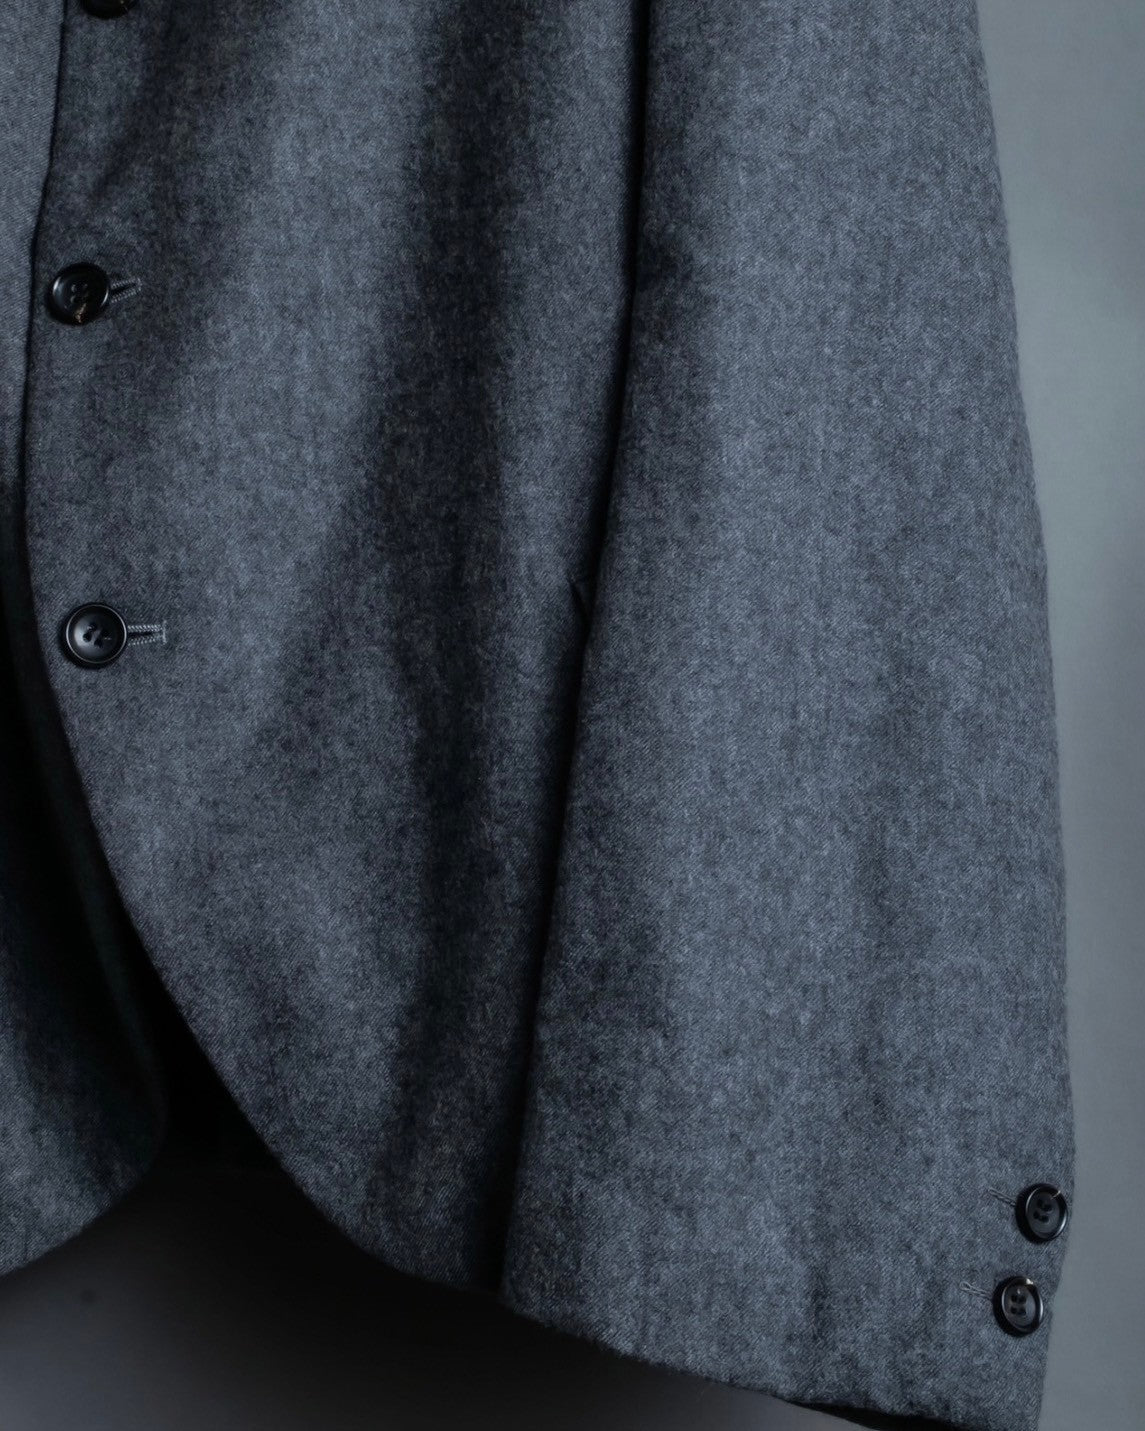 "Comme des Garçons" Stand collar multiple pocket tailored jacket